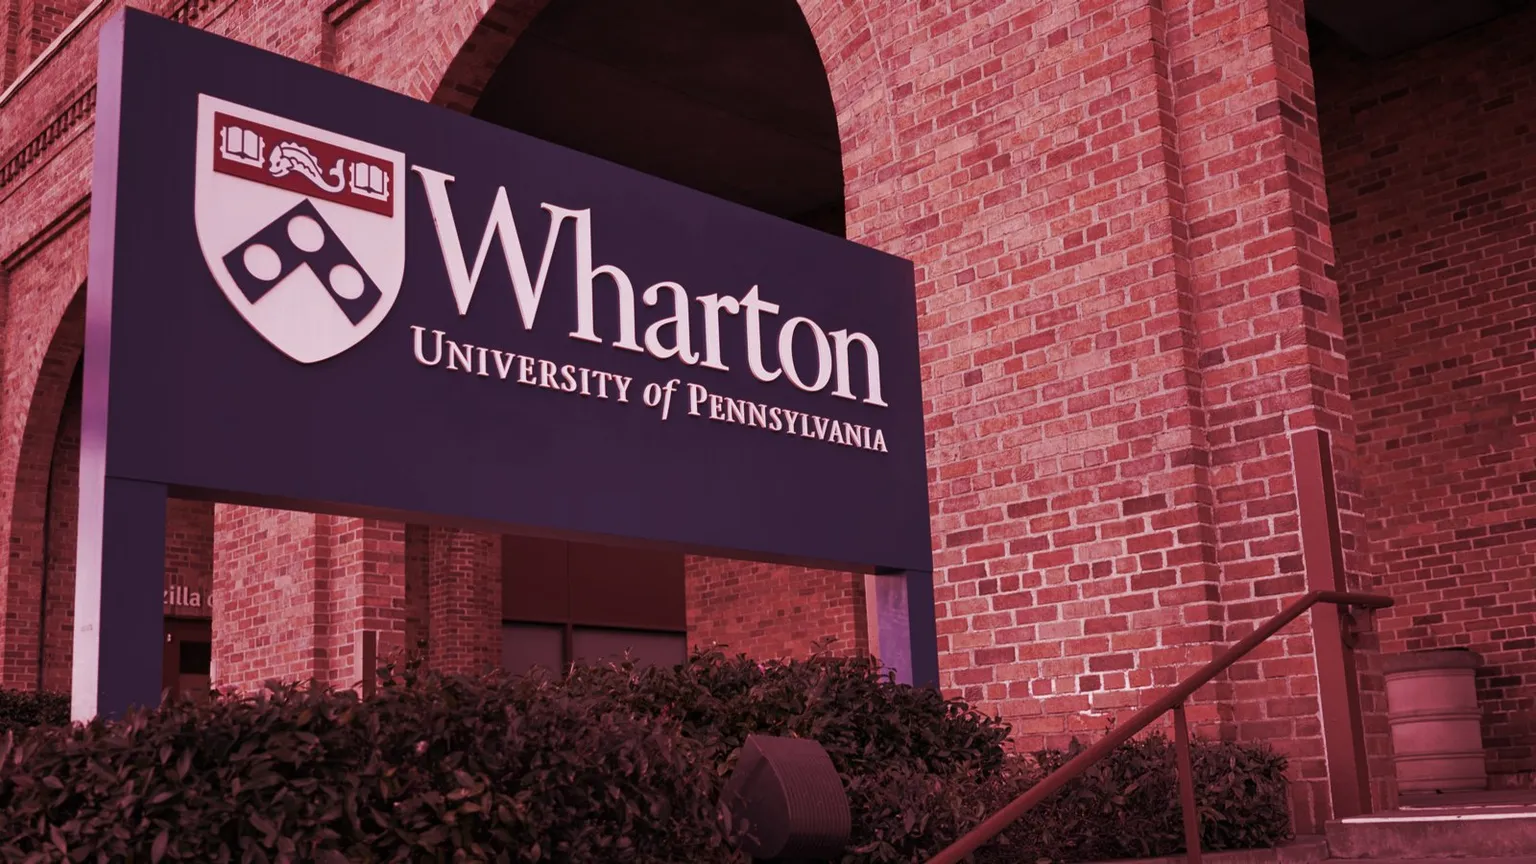 The Wharton School of the University of Pennsylvania. Image: Shutterstock